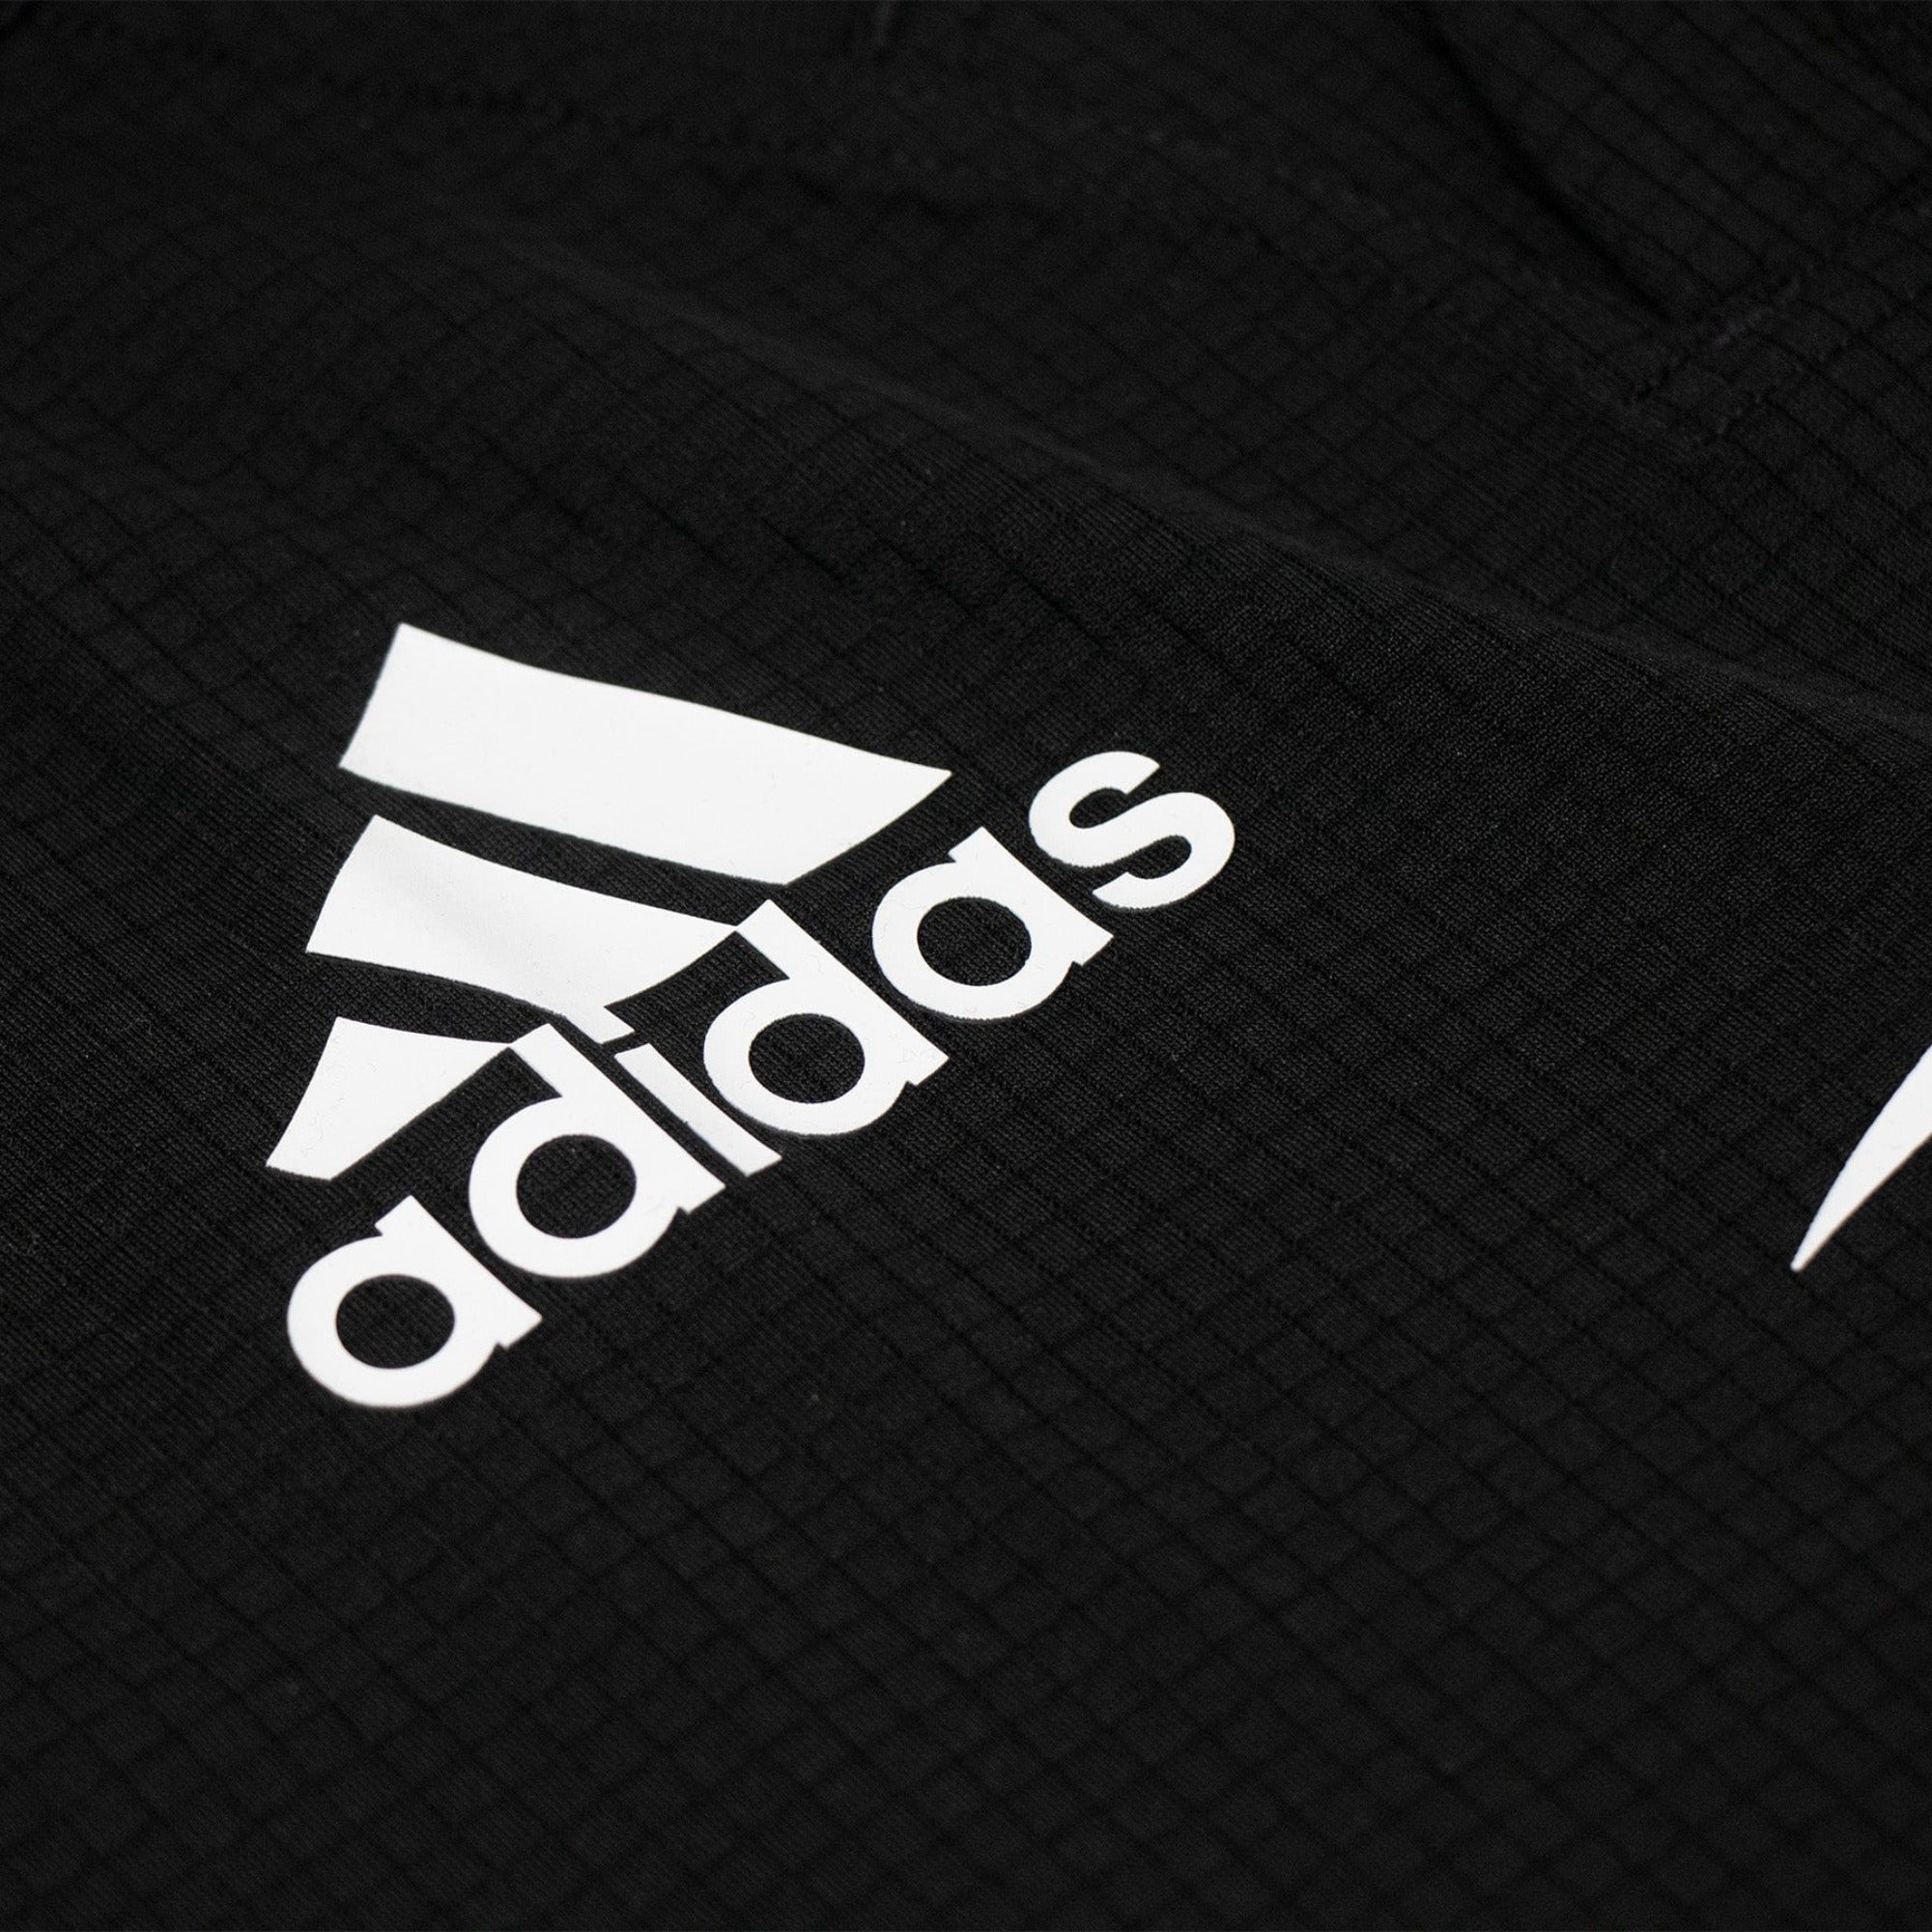 Māori All Blacks Home Jersey 22/23 by Adidas | 2XL | Black/White